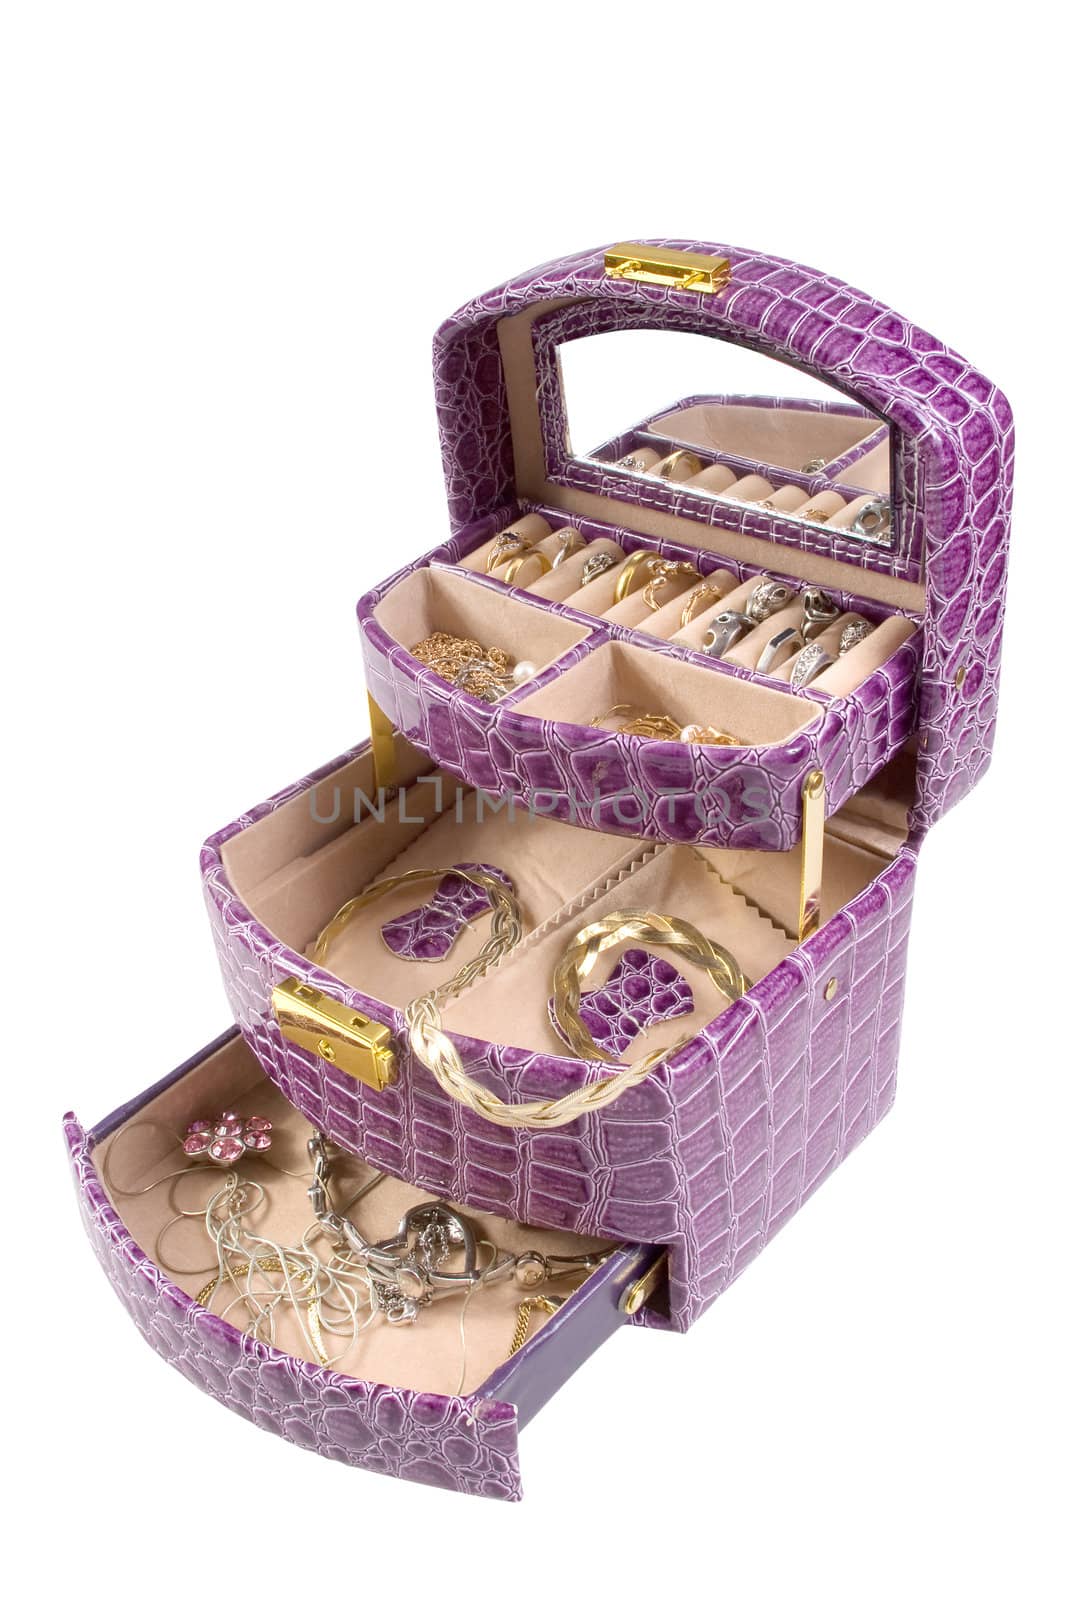 Lilac box with some jewelry by BIG_TAU